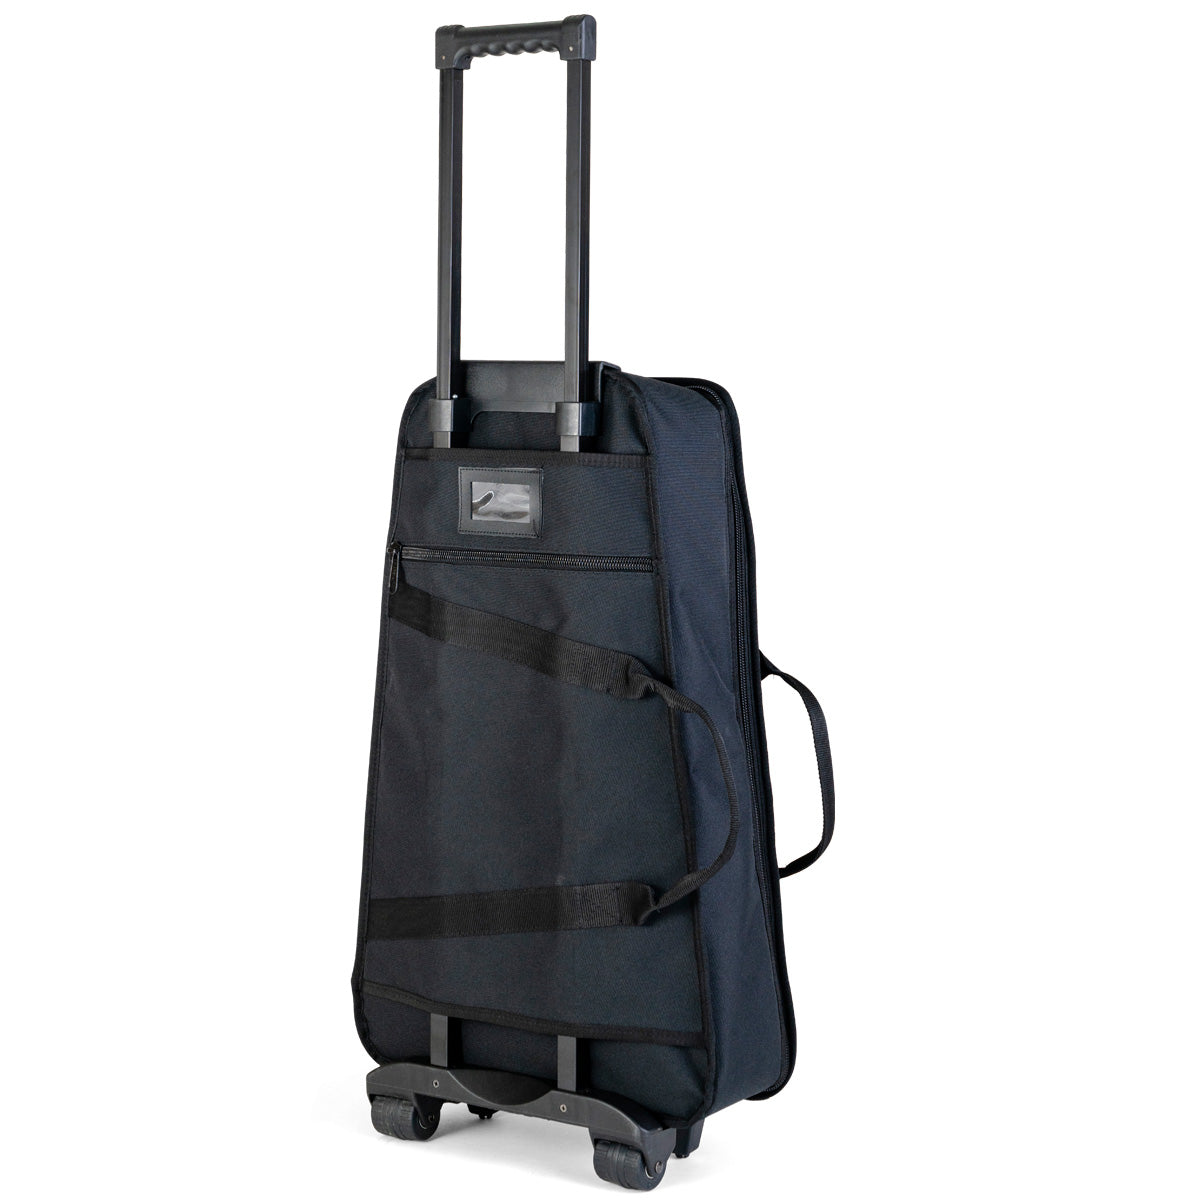 Dixon Bell Kit with Traveler Bag